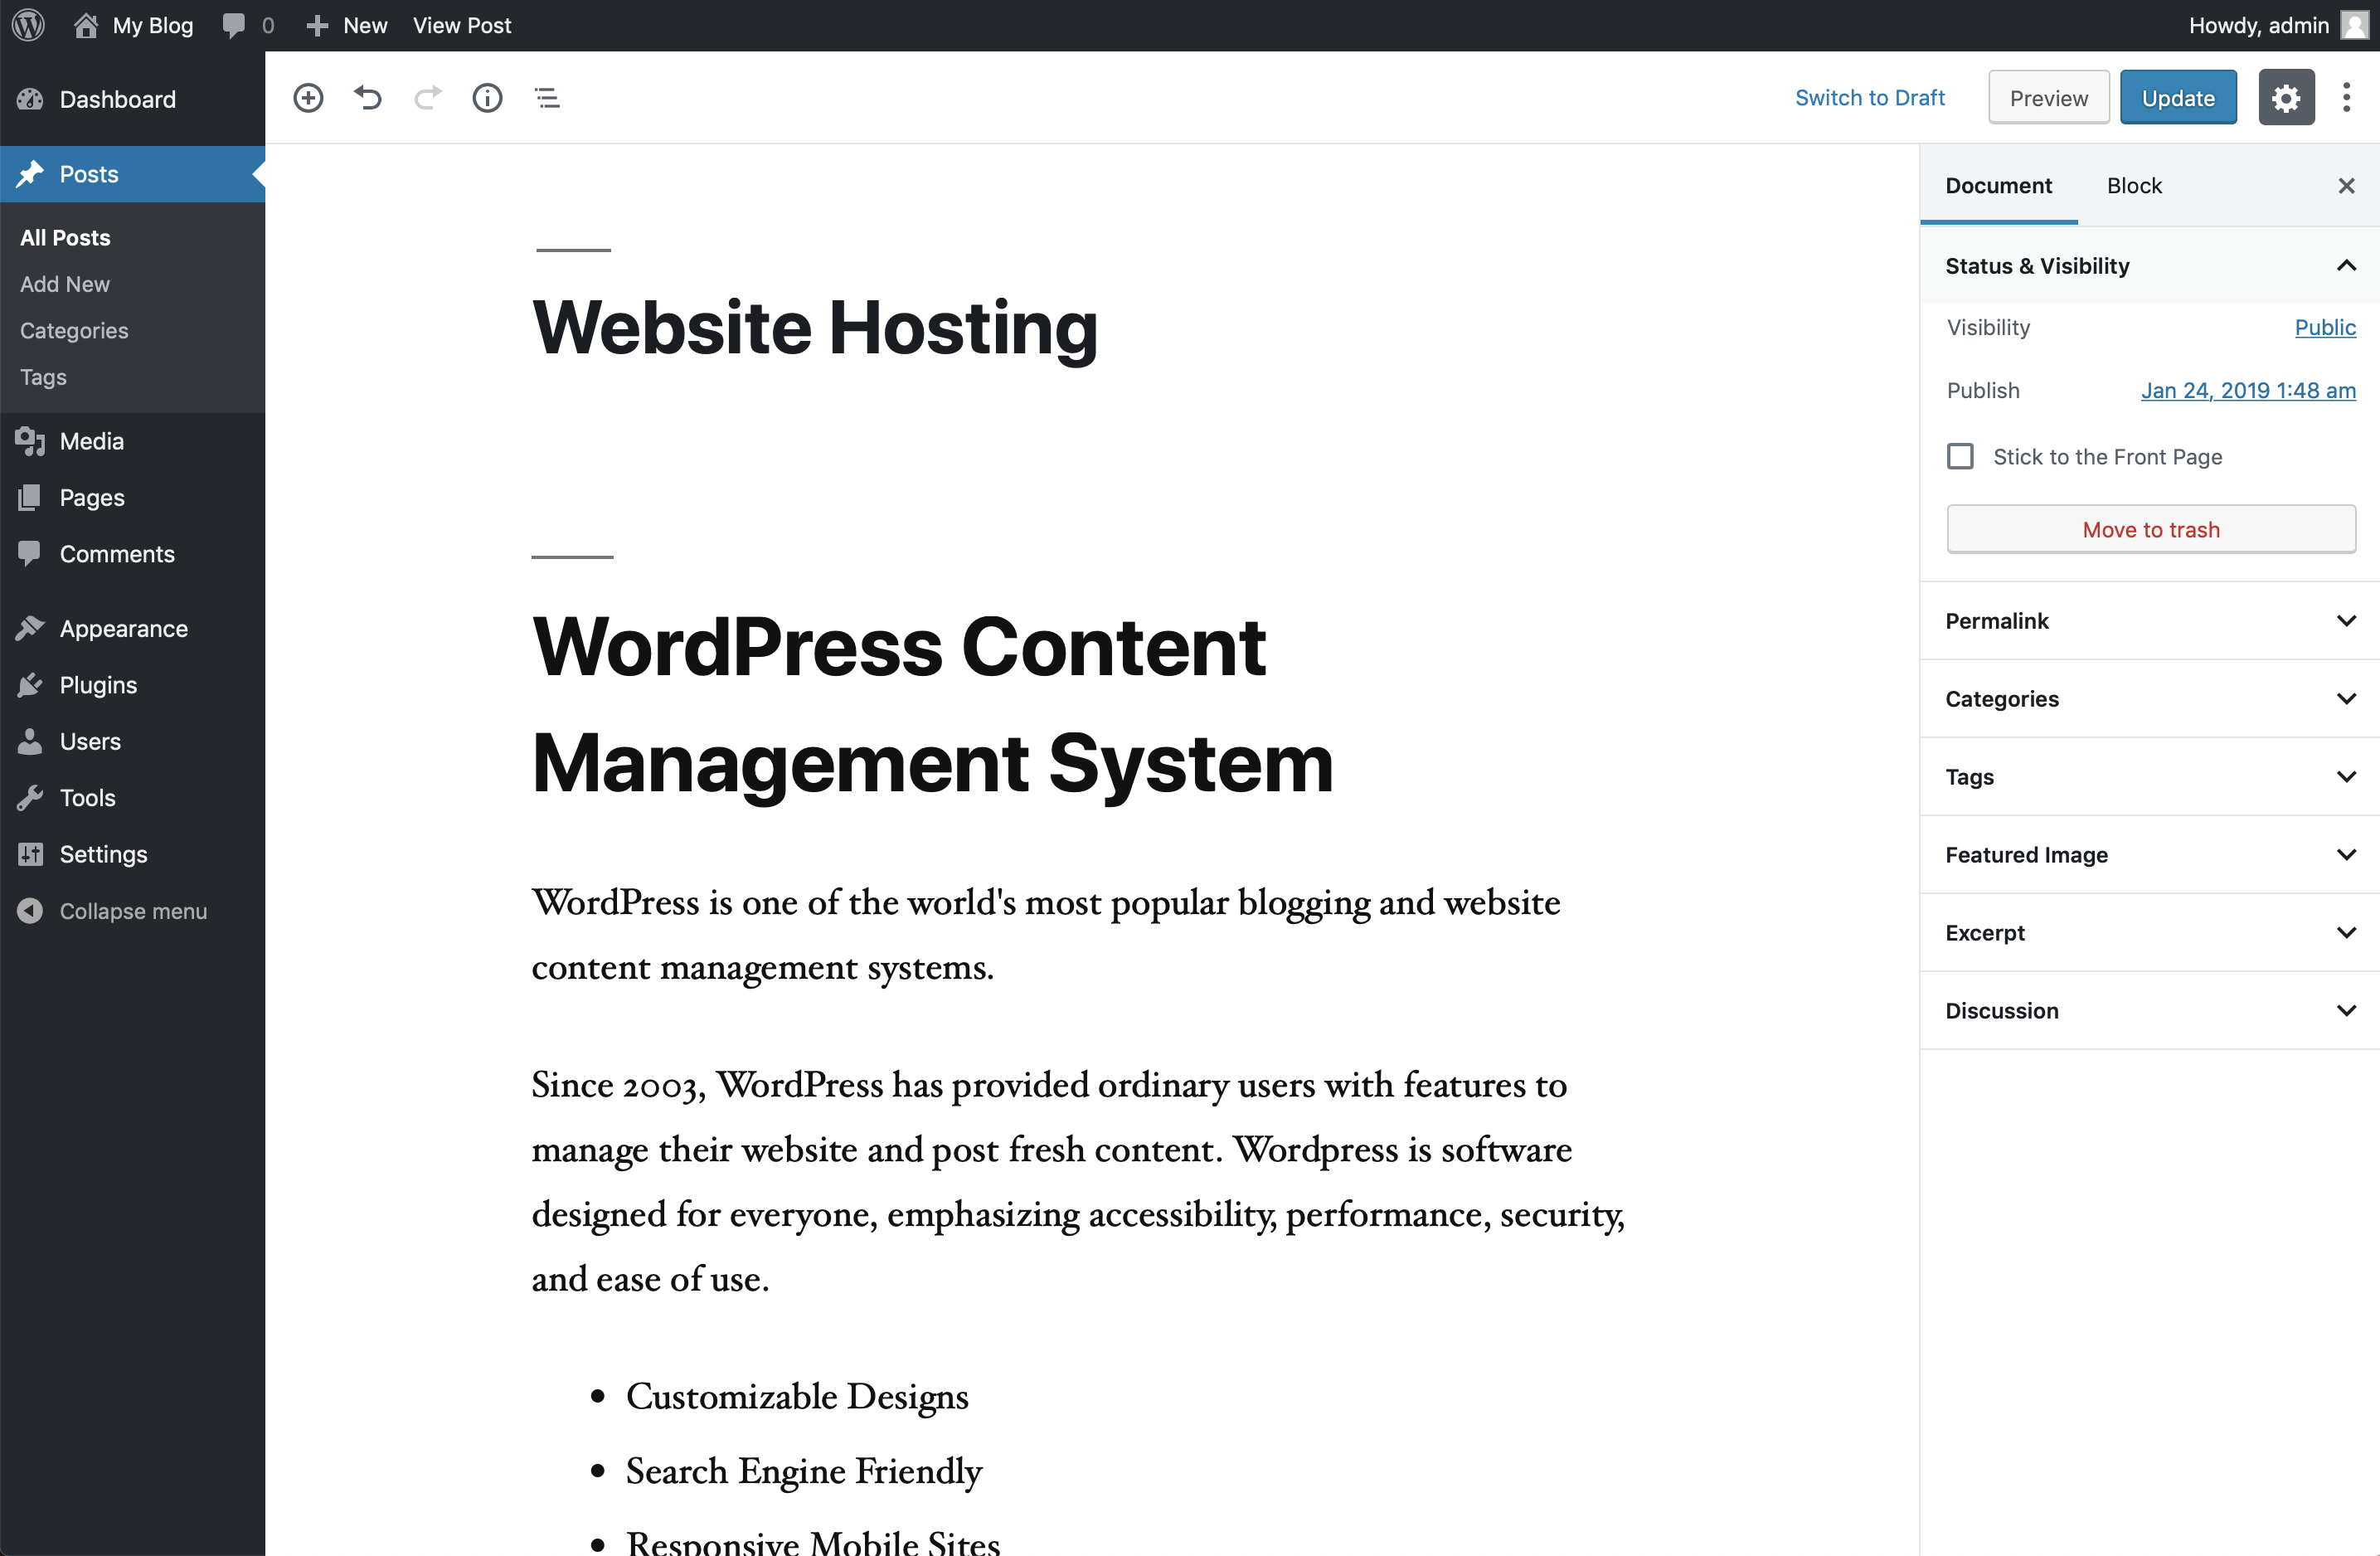 download wordpress hosting